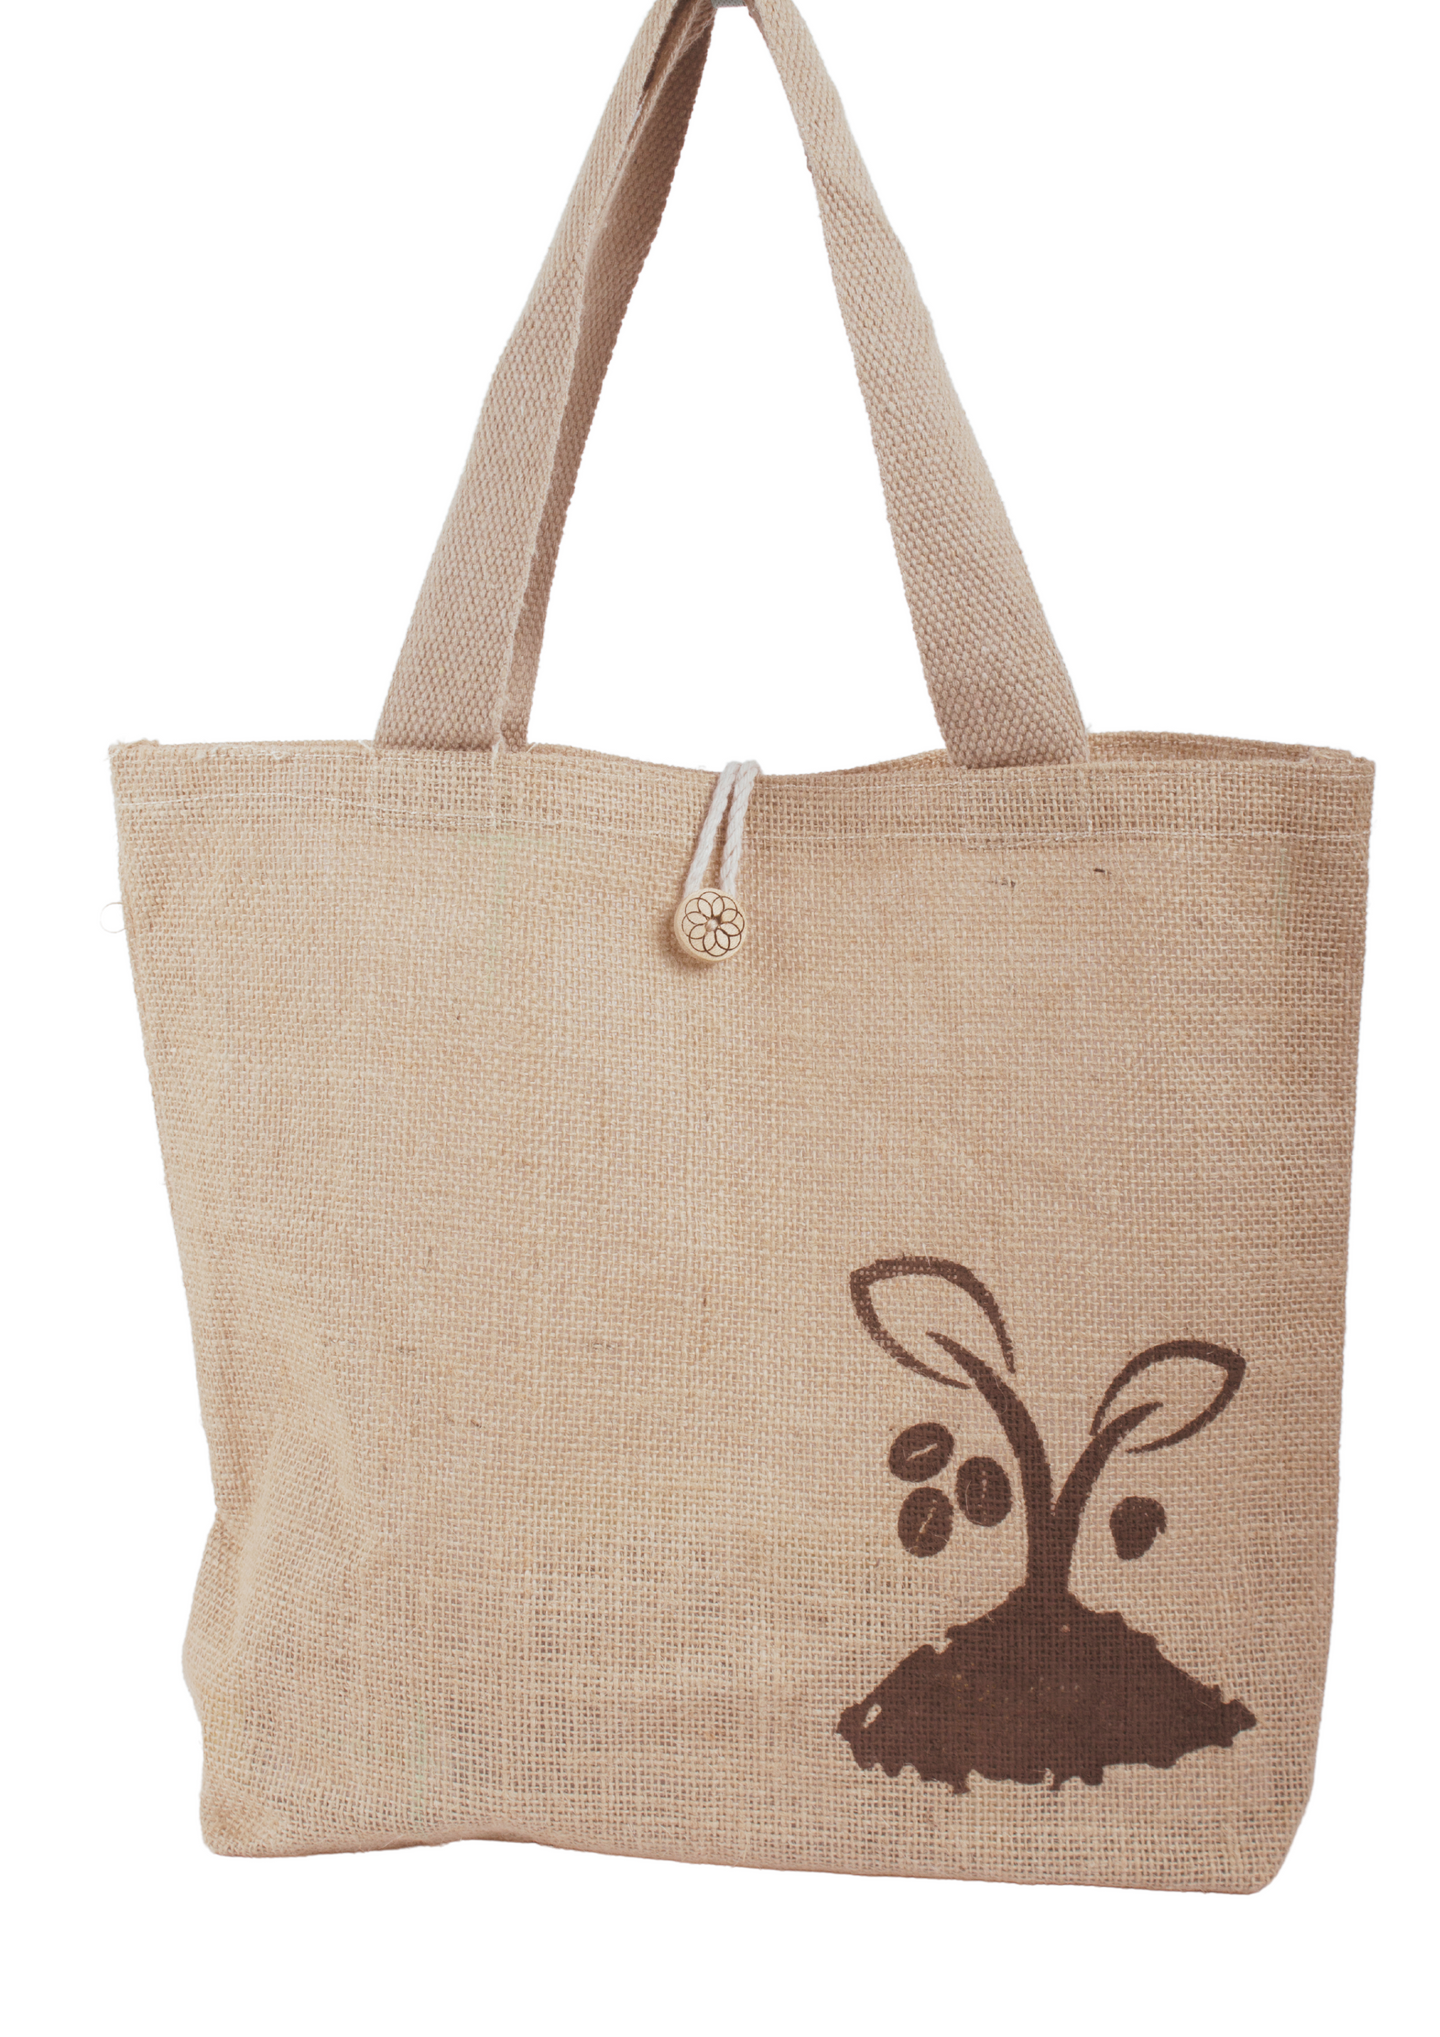 MOKKAFARMS 100% Jute Bags | Multi-purpose Bag | Grocery + Shopping Bag | Button Closure | Food-grade | Tote Zipper + Button Bag | 16in x 16.5in